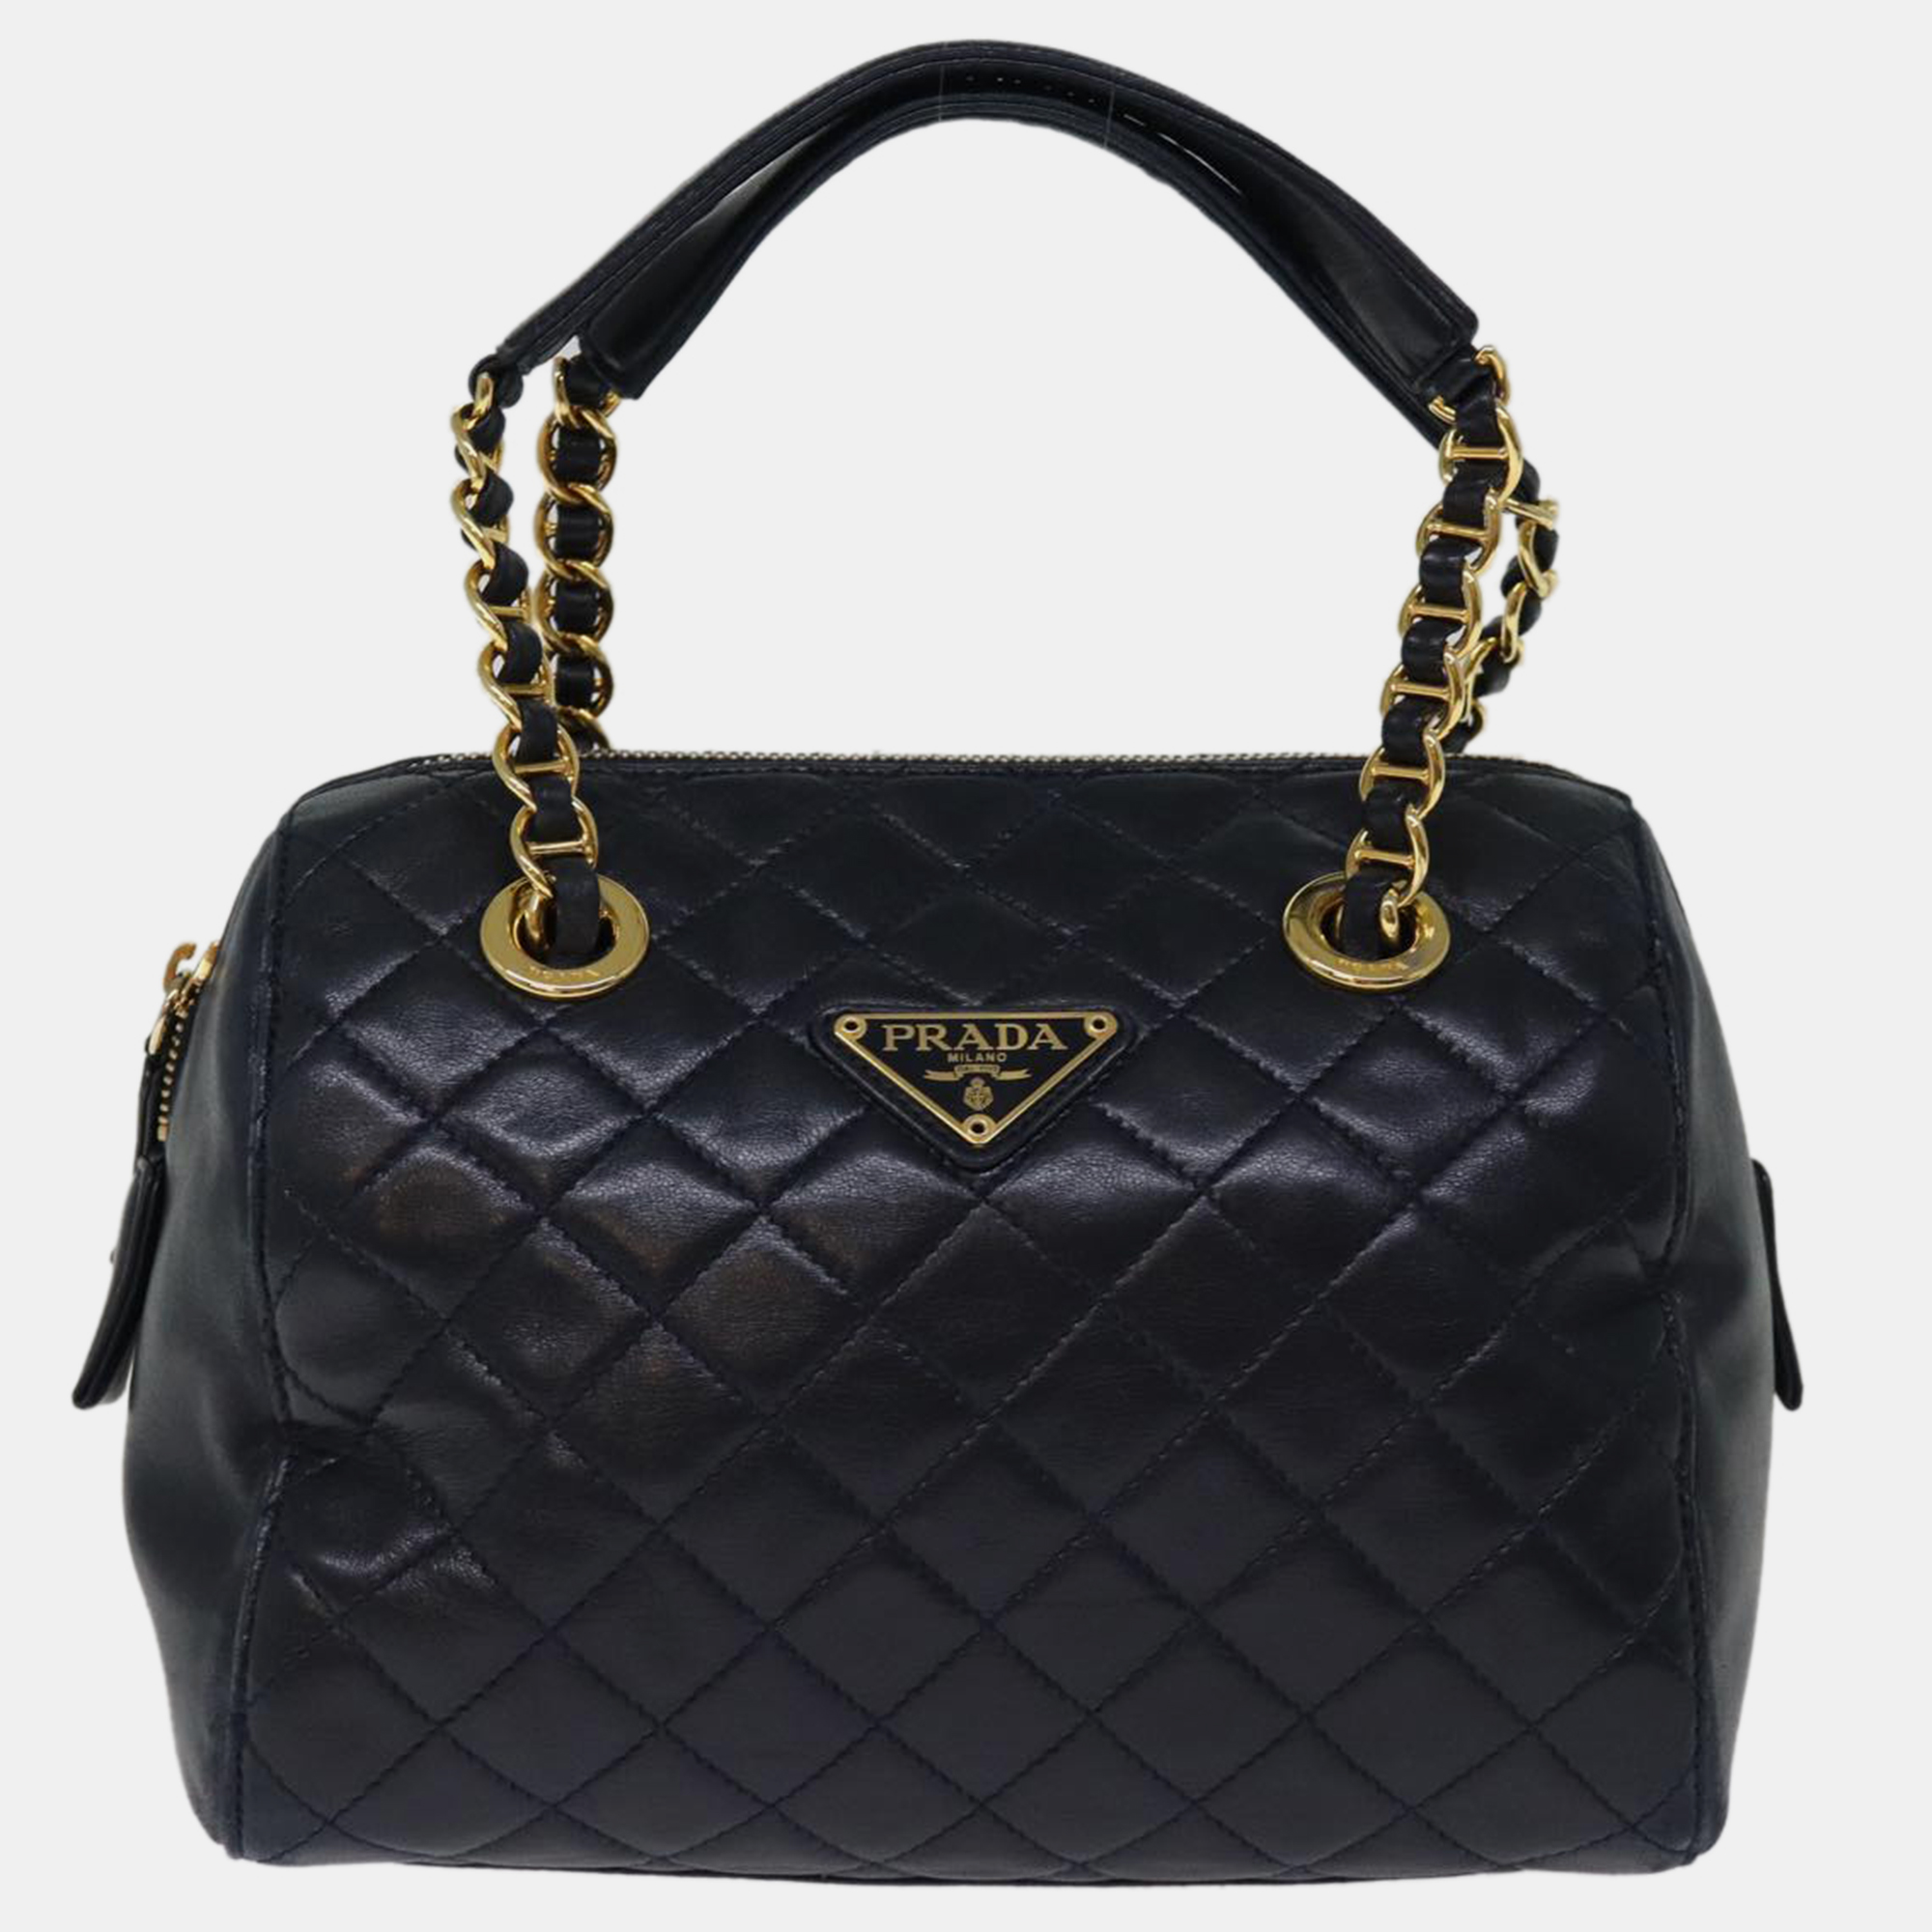 Prada navy leather handbag